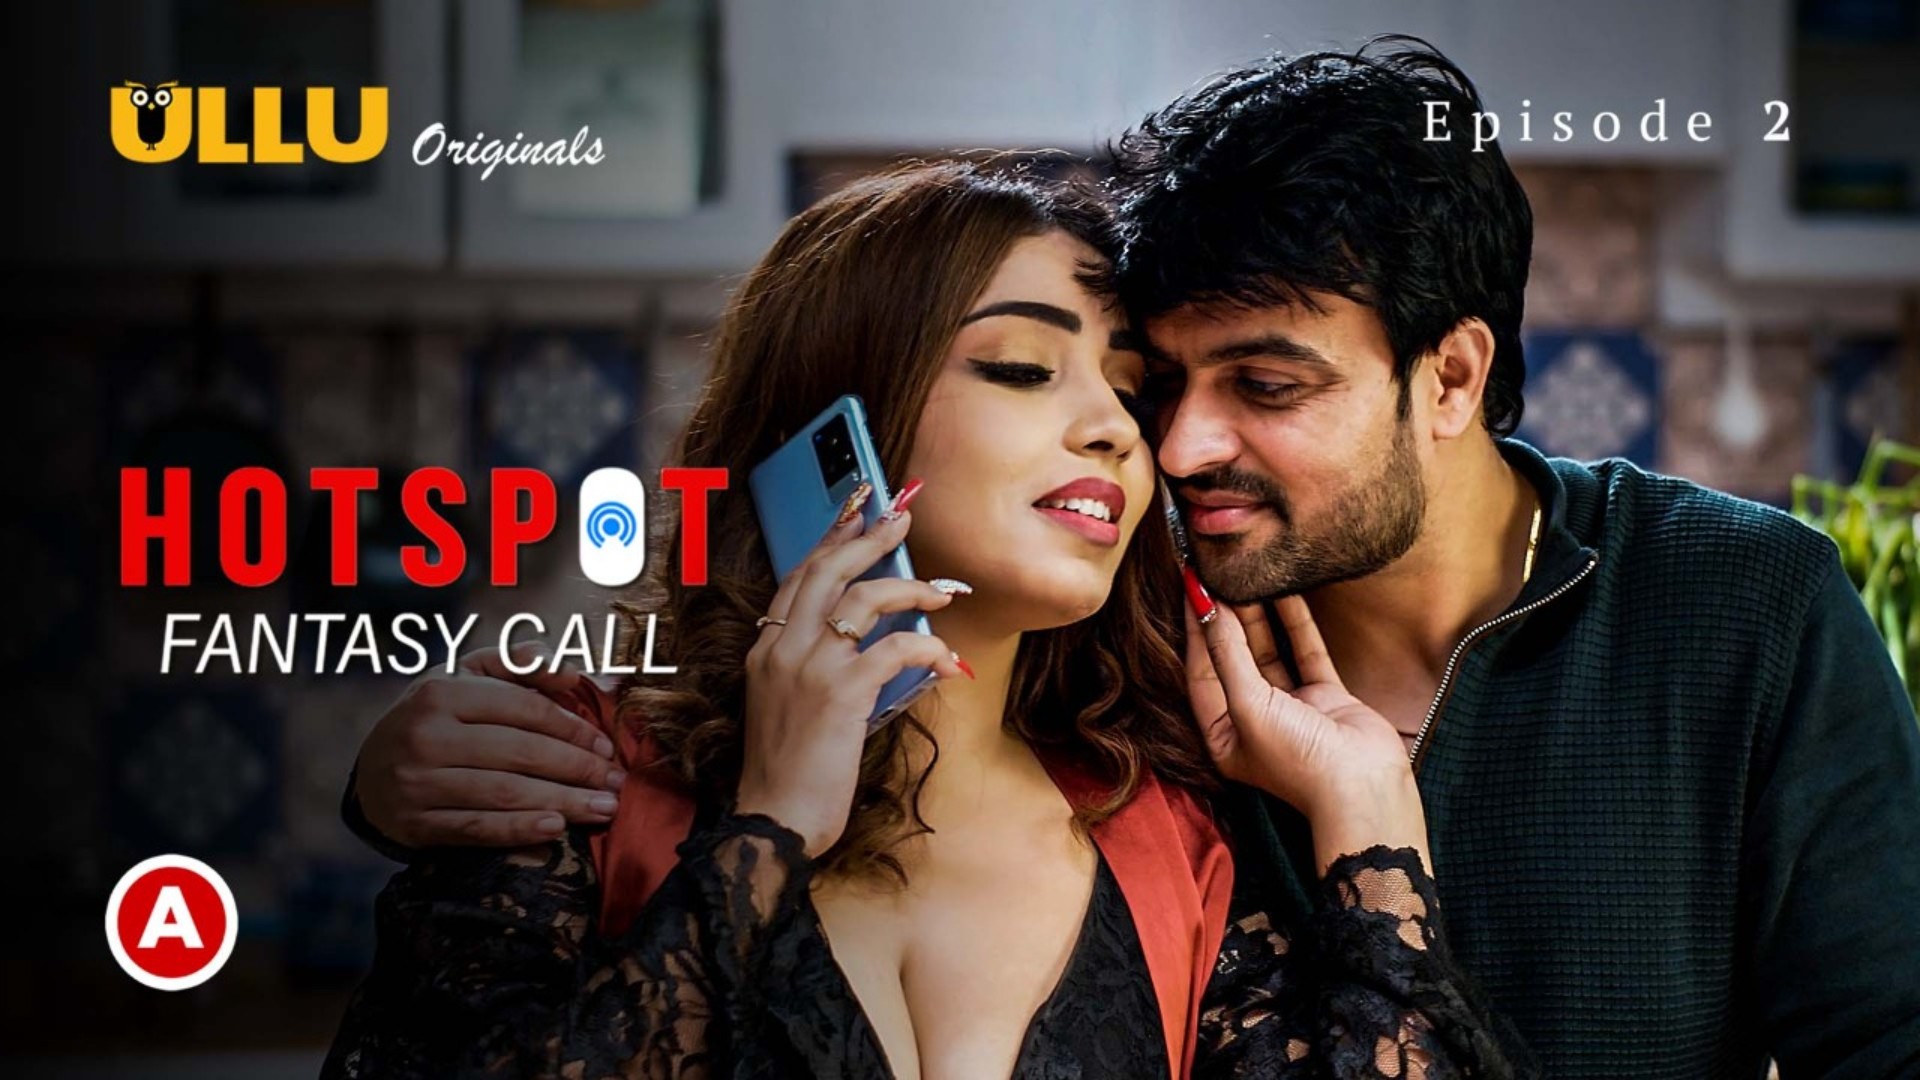 Hotspot Fantasy Call S01e02 2021 Hindi Hot Web Series Ullu Indian Uncut Web Series Watch